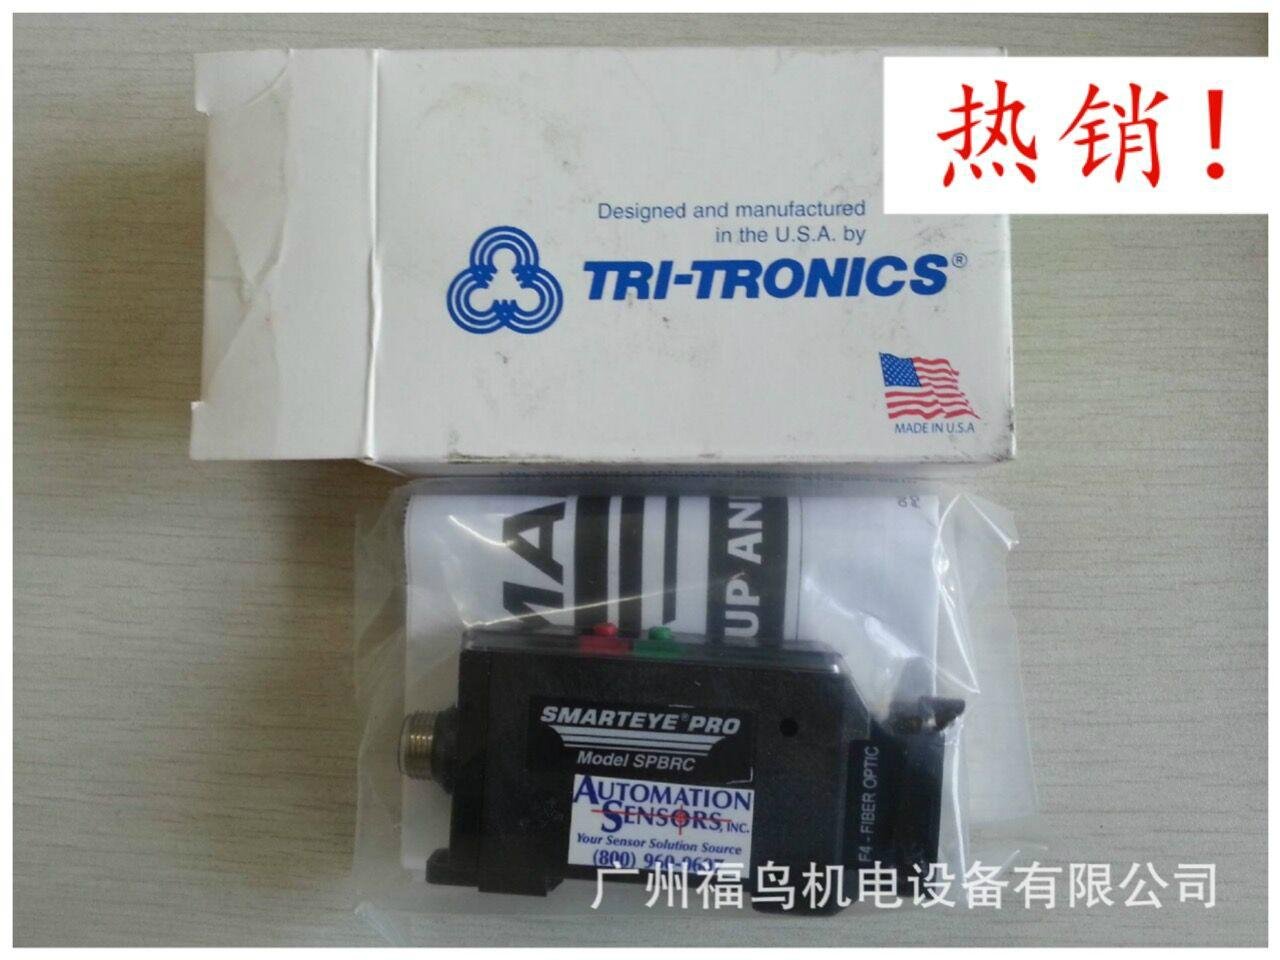 TRI-TRONICS传感器, 型号: SPBRCF4